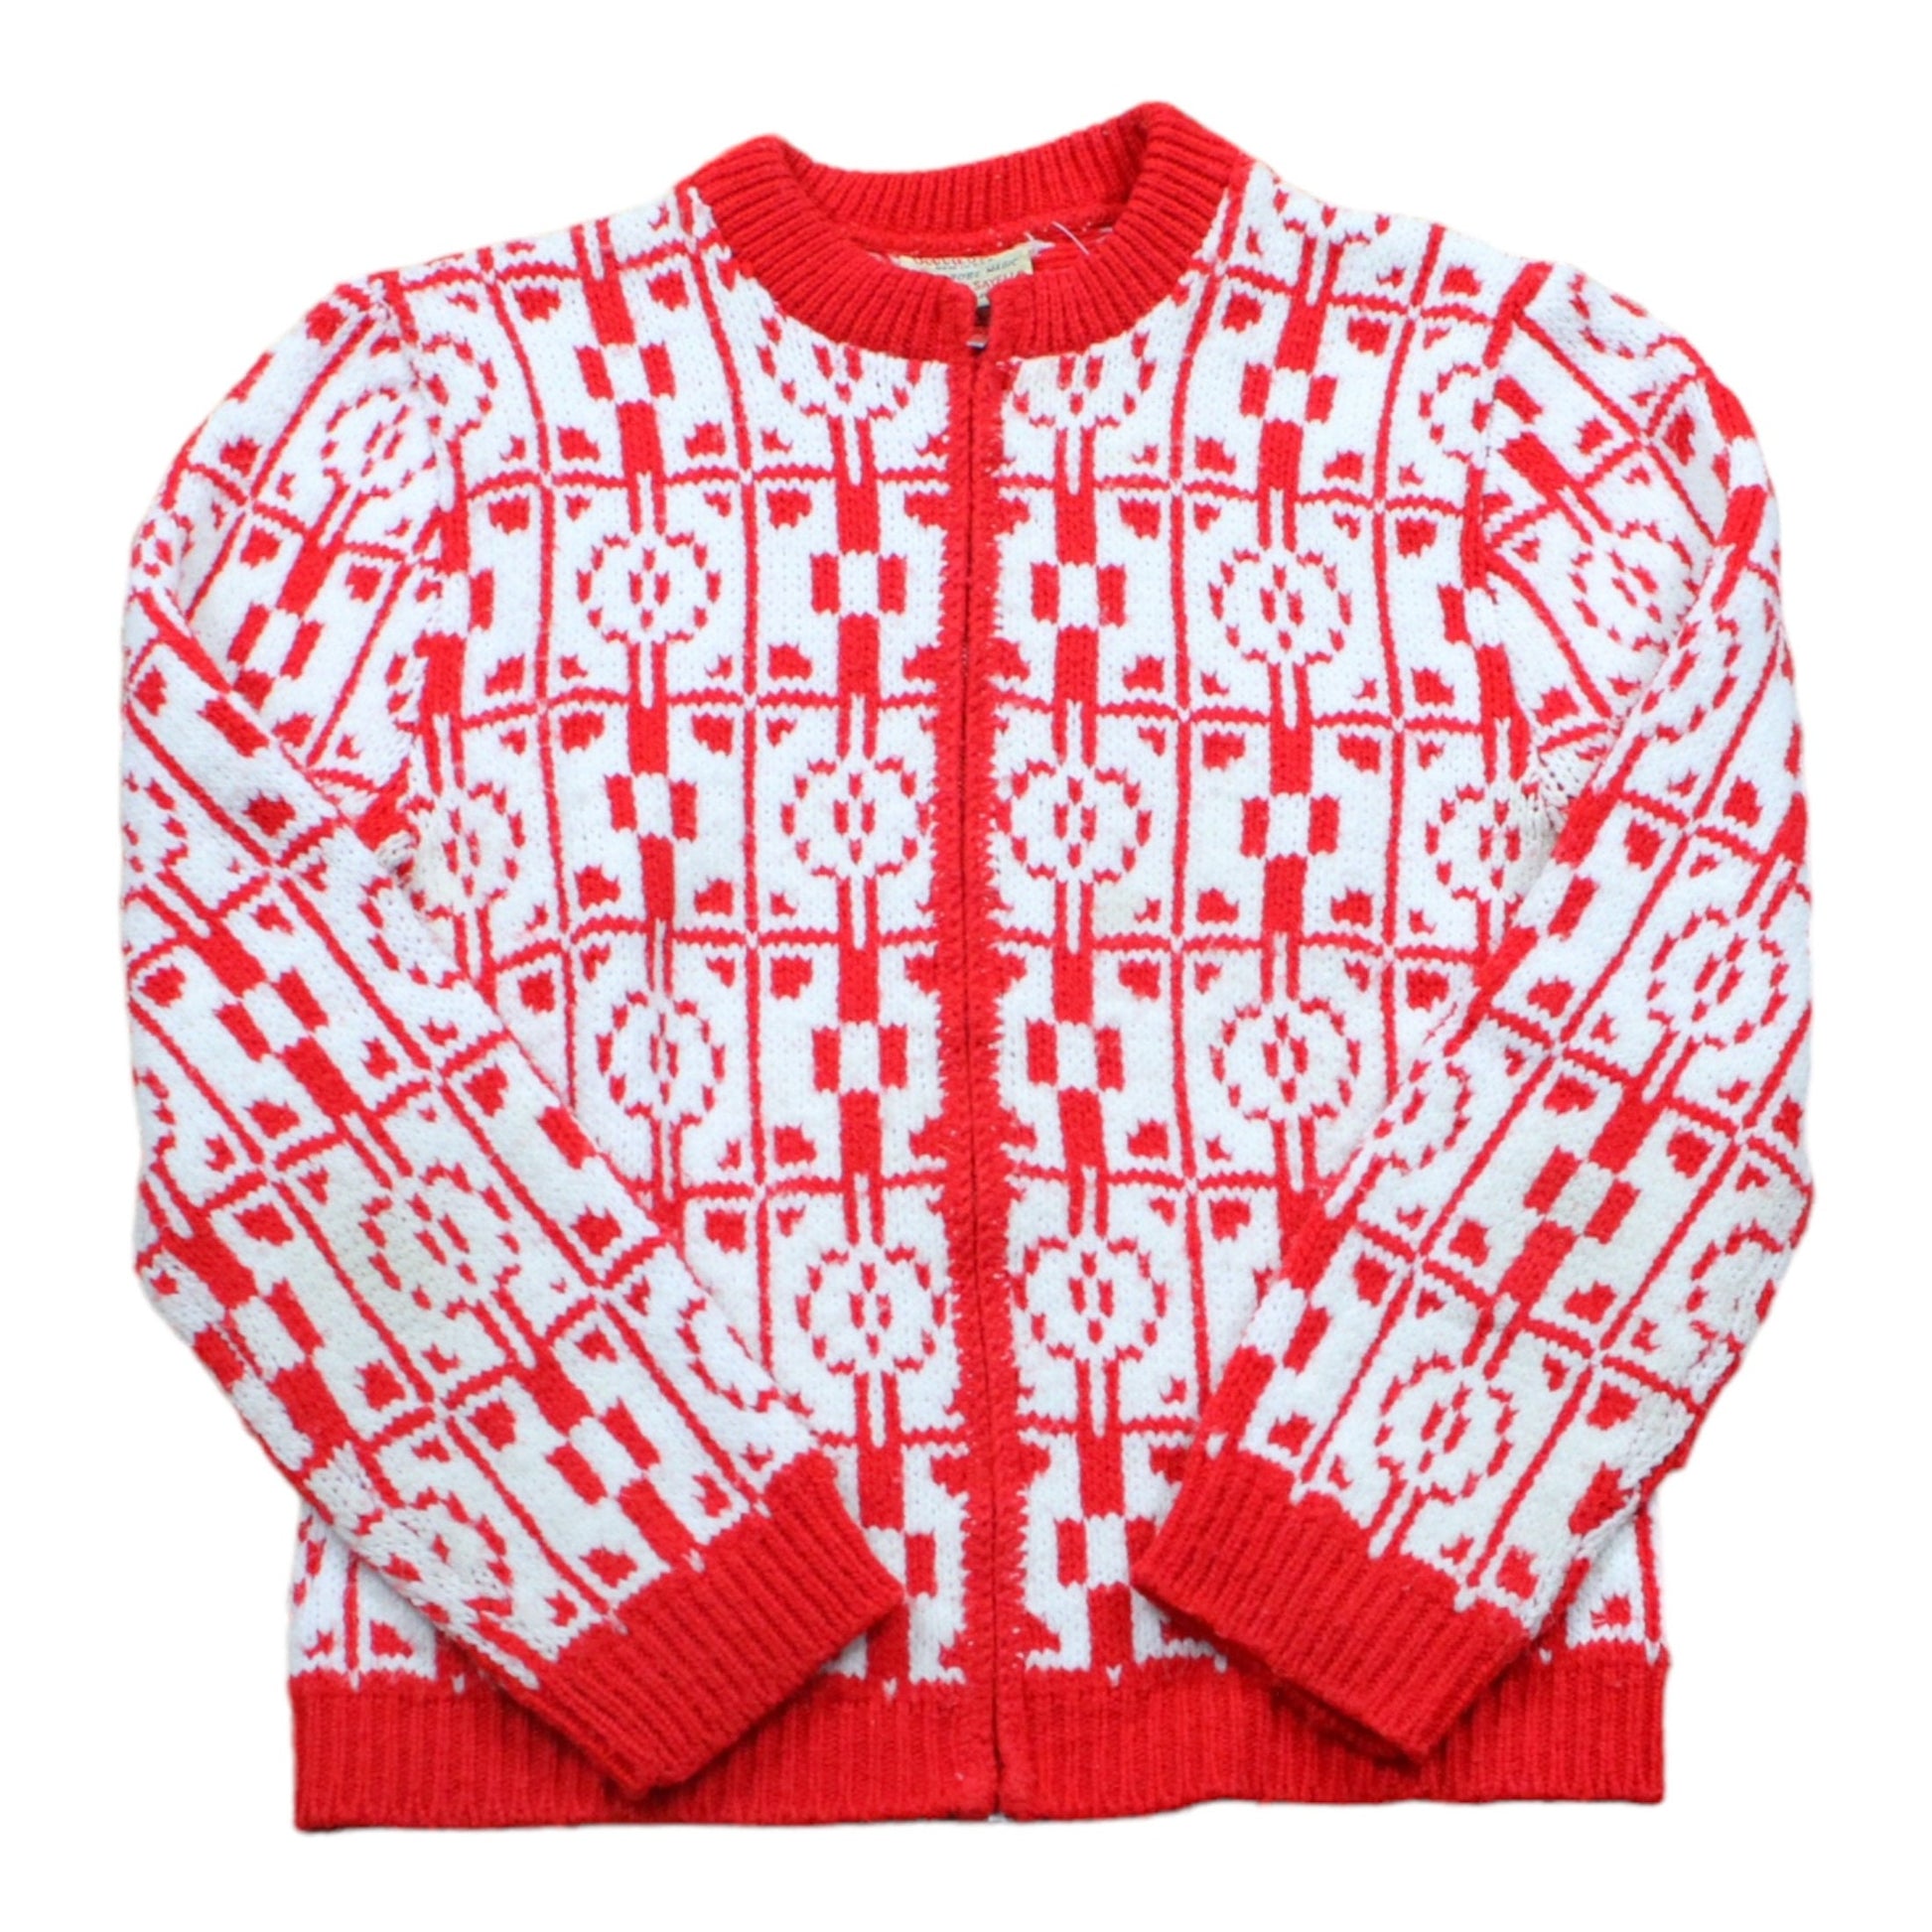 1950s/1960s Bobbie Brooks Wardrobe Magic Dupont's Sayelle Acrylic Knit Zip Up Cardigan Sweater Made in USA Women's Size XS